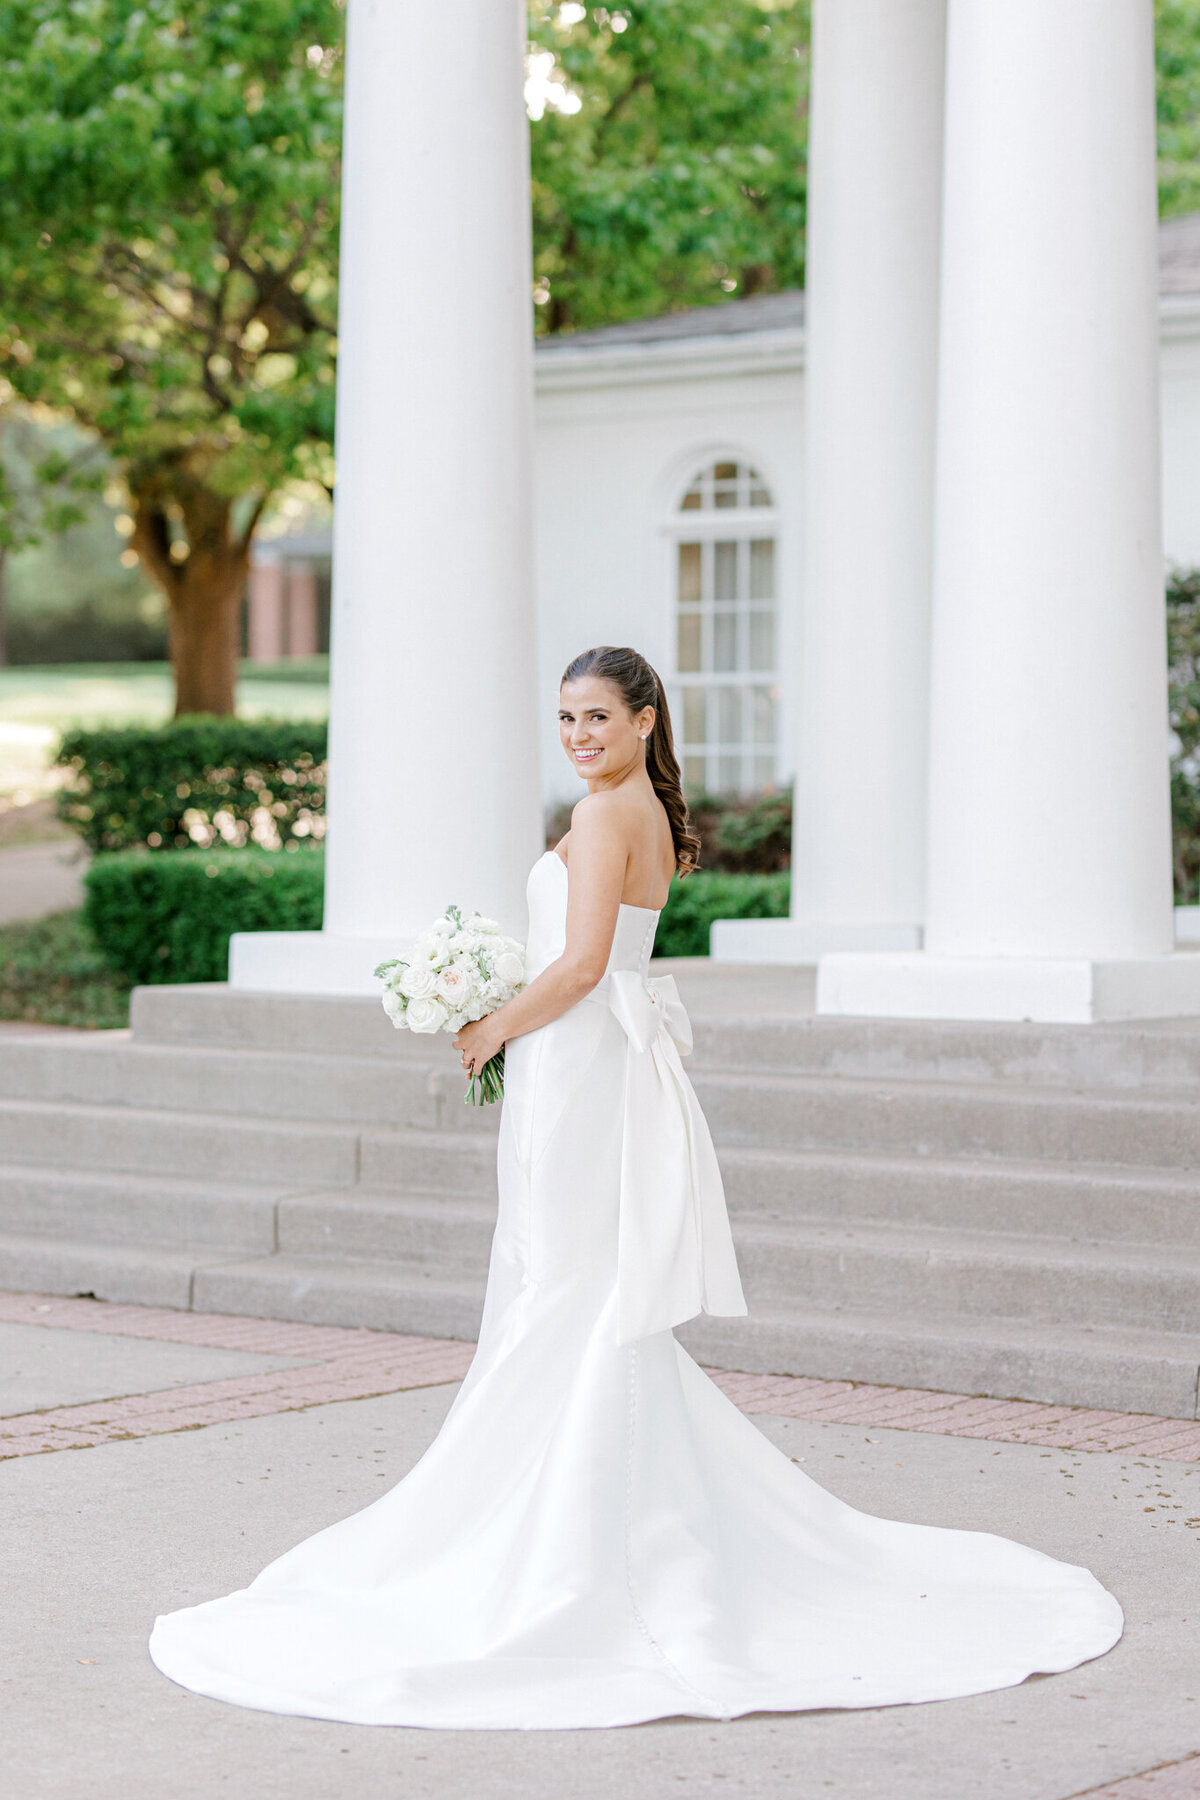 Annie's Bridal Portraits at Arlington Hall Turtle Creek Park | Dallas Wedding Photographer | Sami Kathryn Photography-12